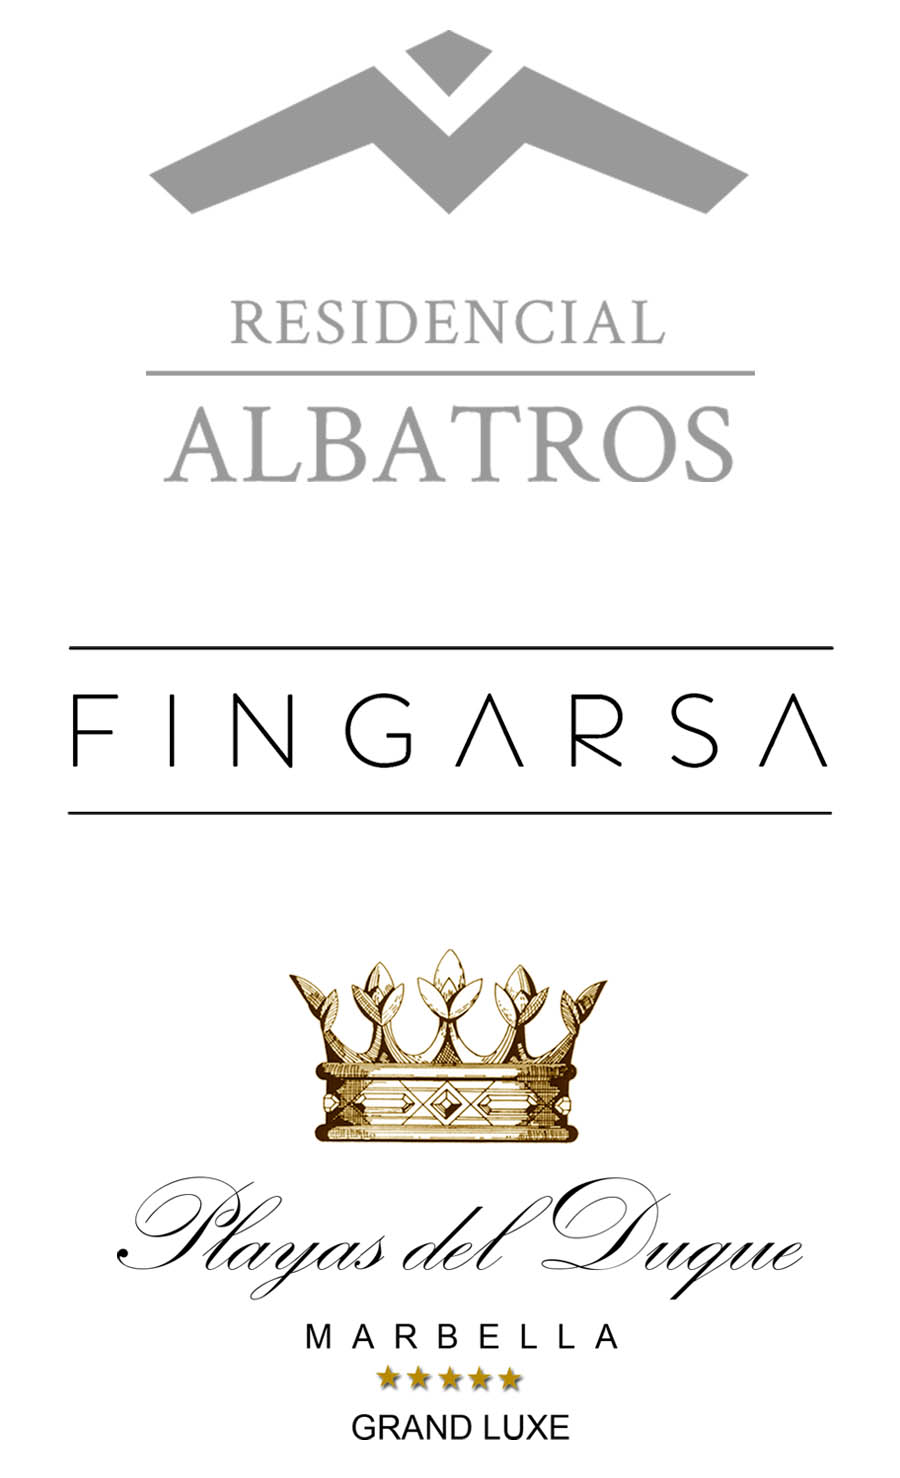 residencialAlbatros-fingarsa-playasDelDuque